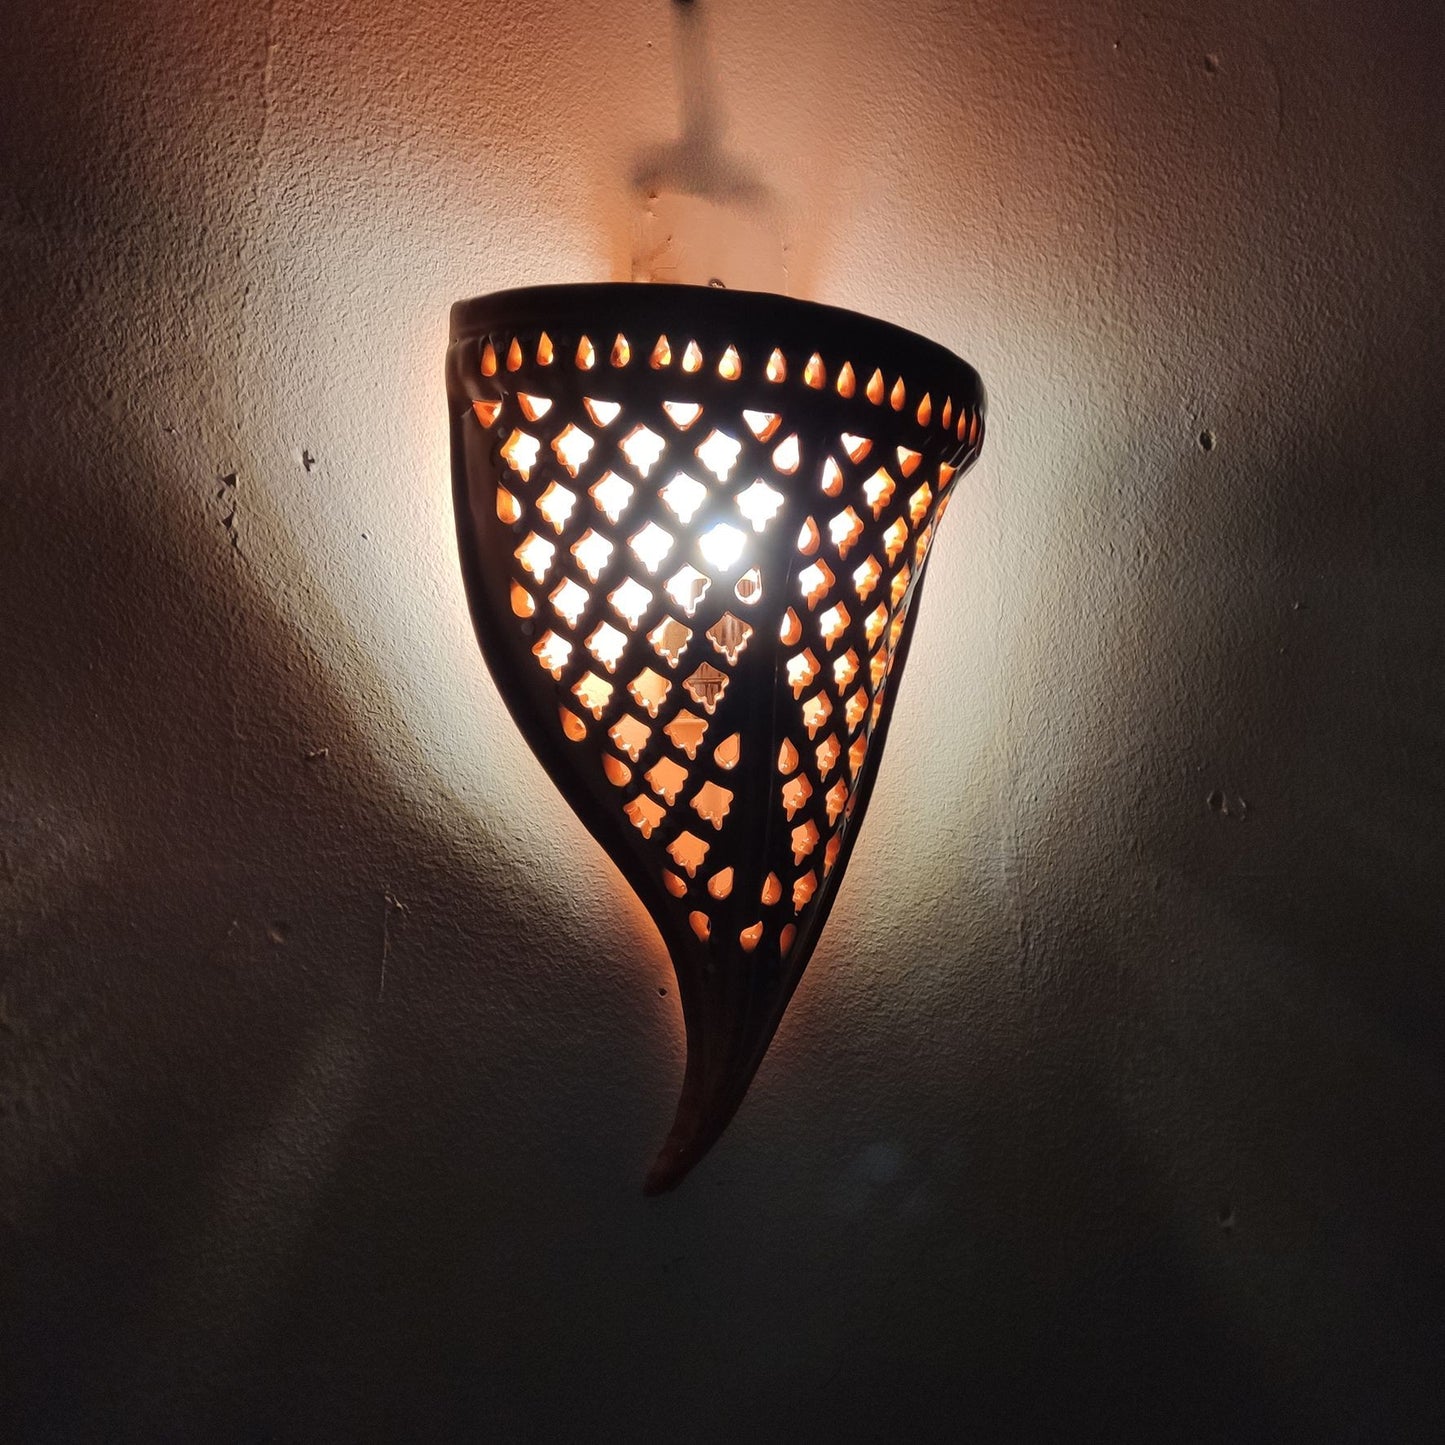 Arredo Etnico Applique Parete Lampada Ceramica Tunisina Marocchina 2411201205